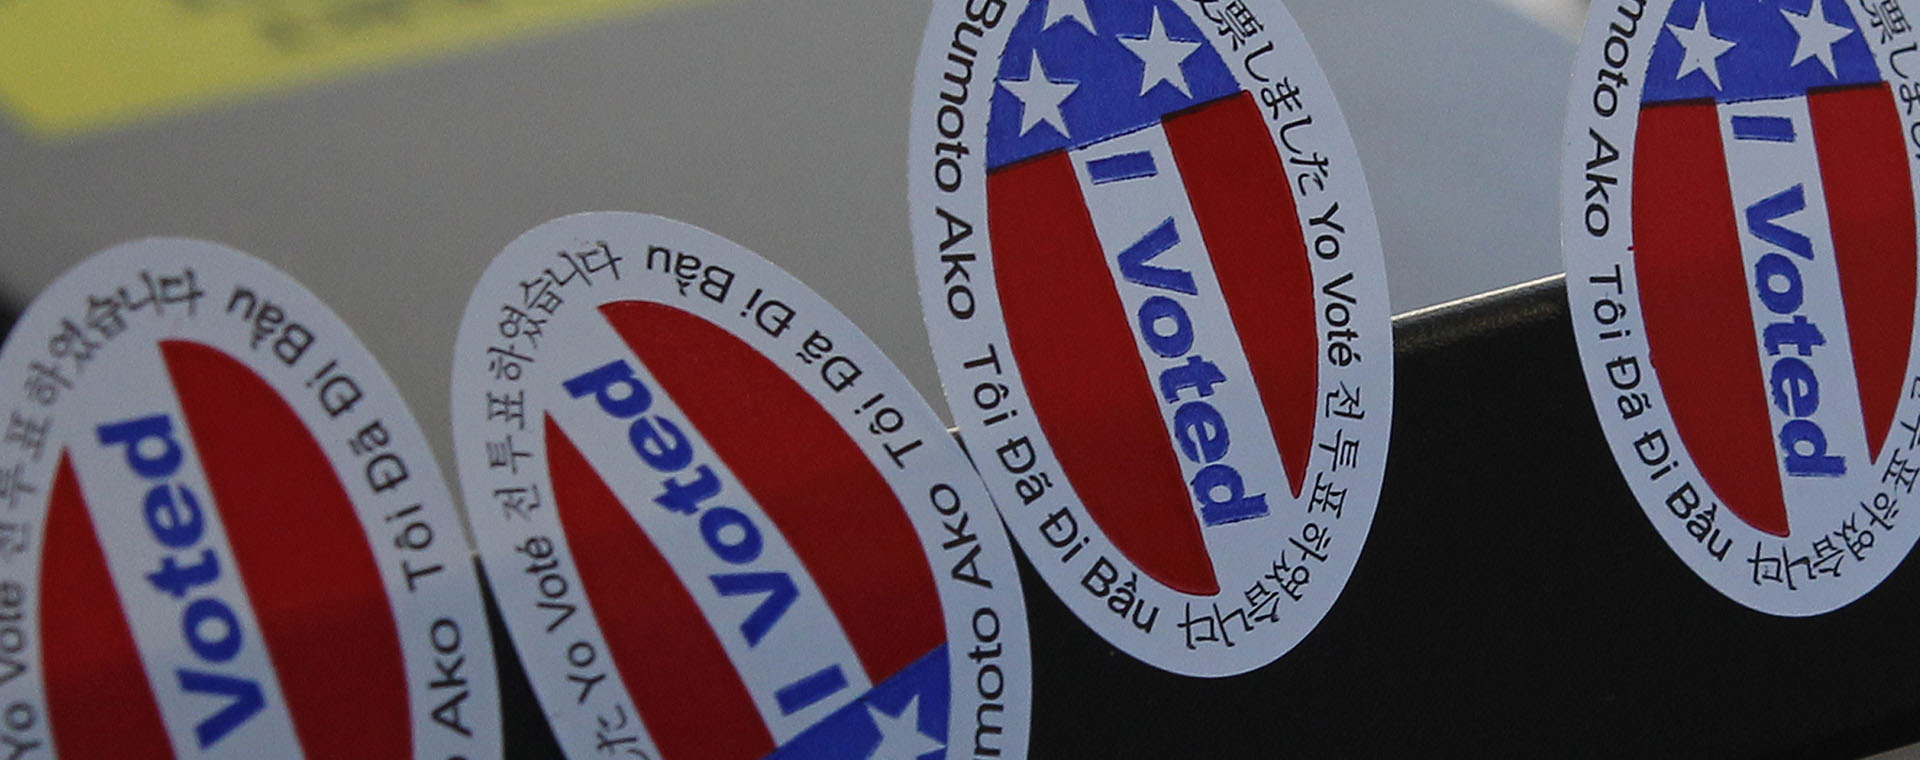 Election vote stickers